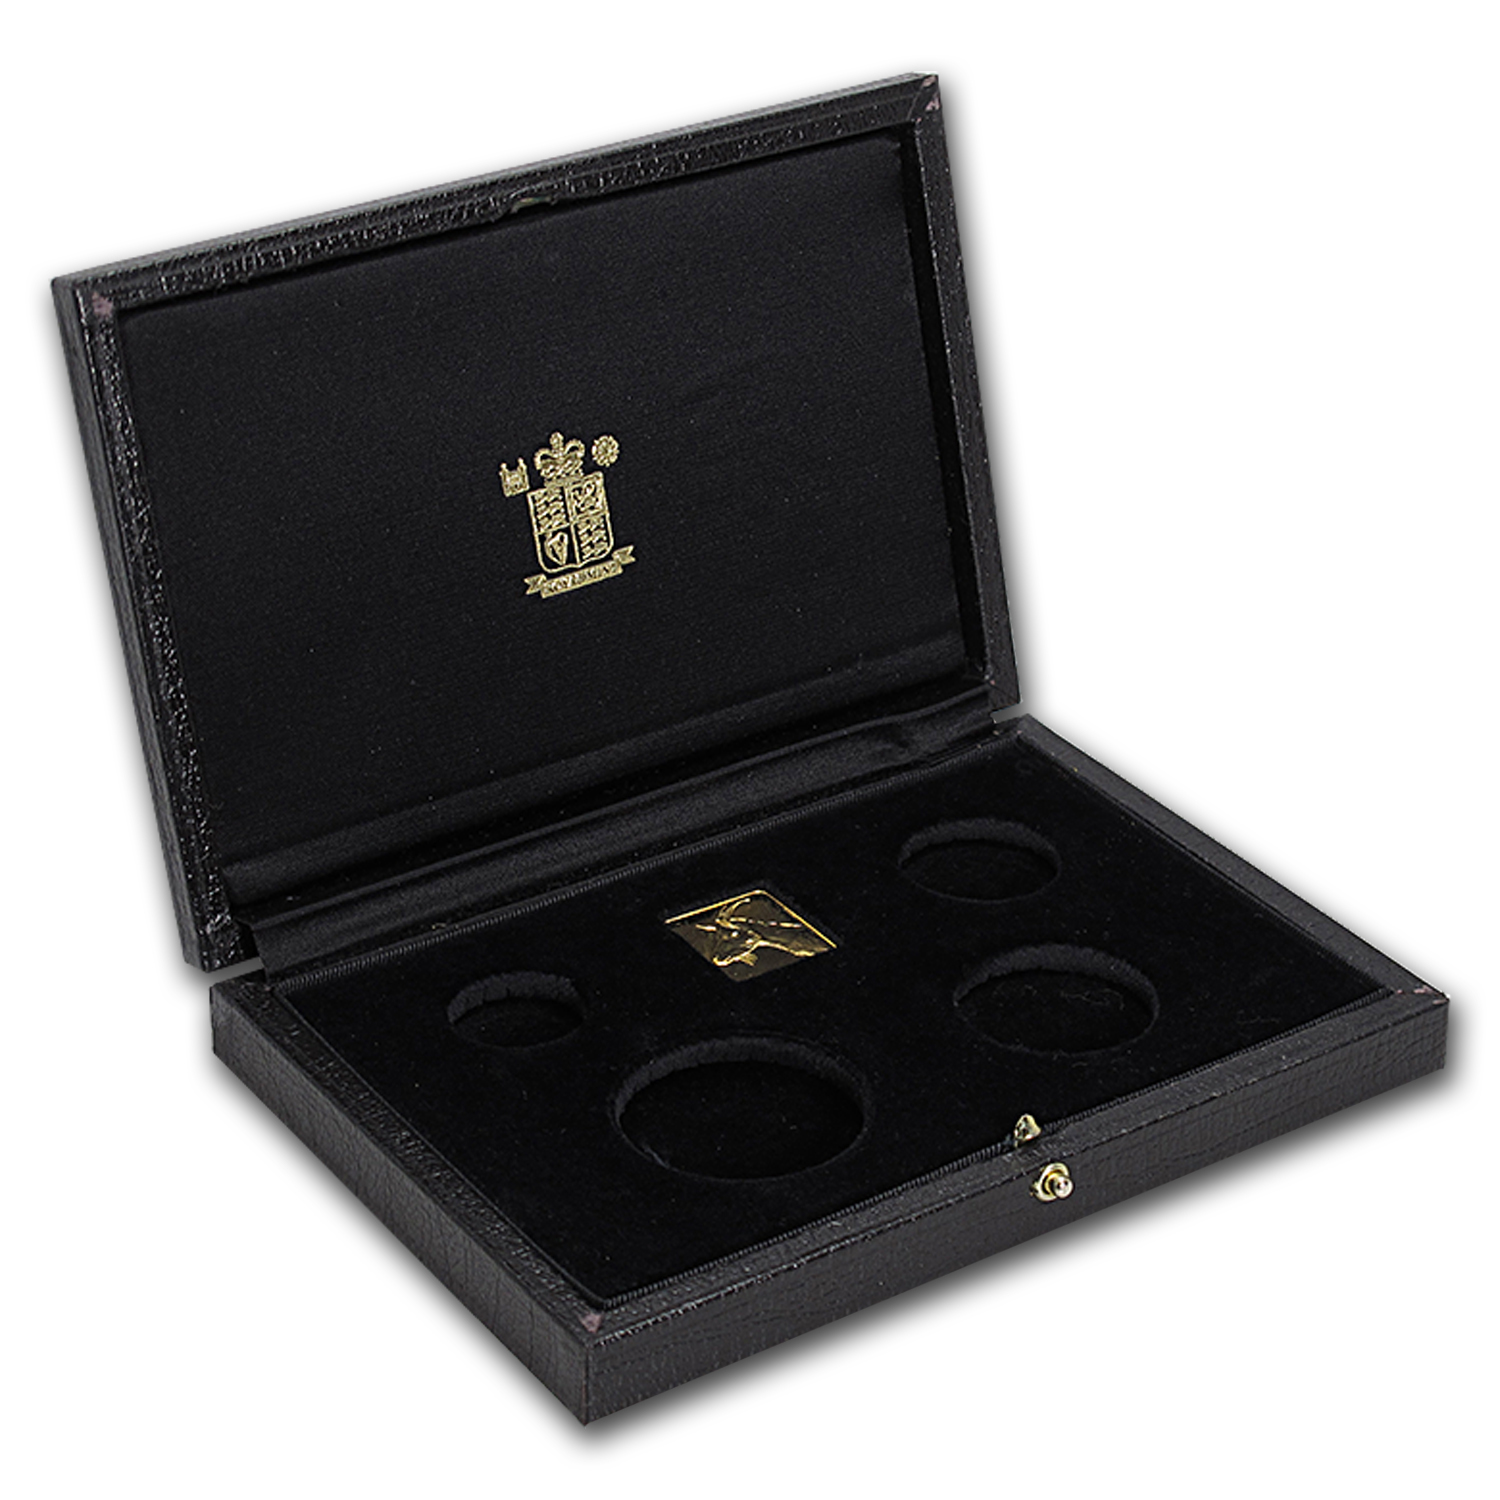 Buy OGP Box & COA - 1991 Proof Gold Britannia 4-Coin Set